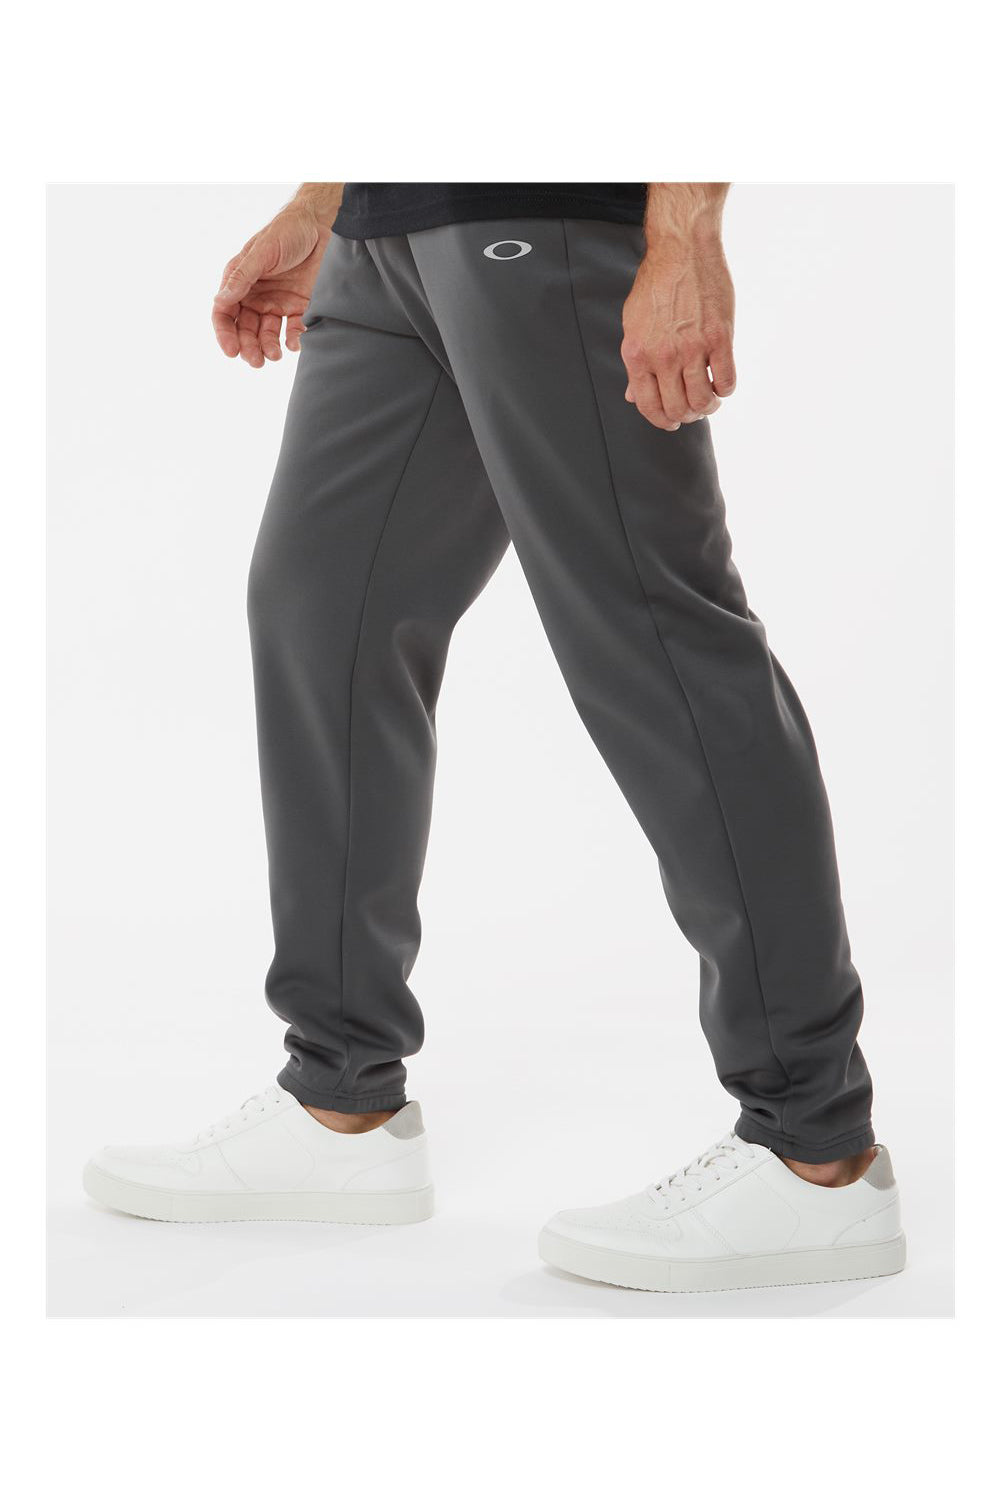 Oakley FOA402996 Mens Team Issue Enduro Hydrolix Sweatpants w/ Pockets Forged Iron Grey Model Side